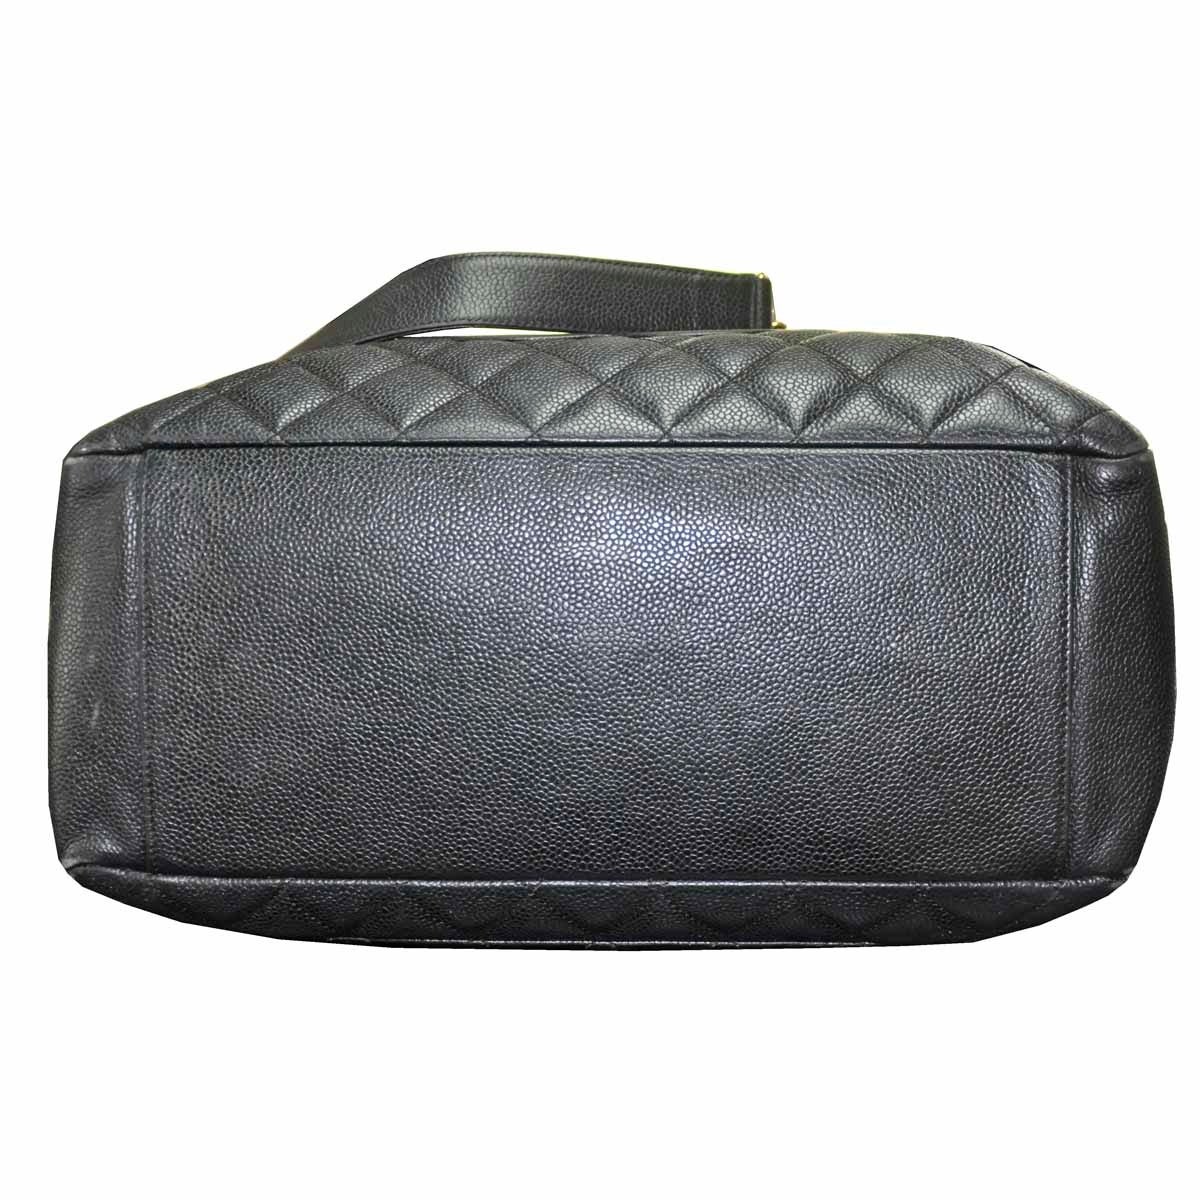 Women's Chanel Grand Shopper Tote GST Black Leather Handbag